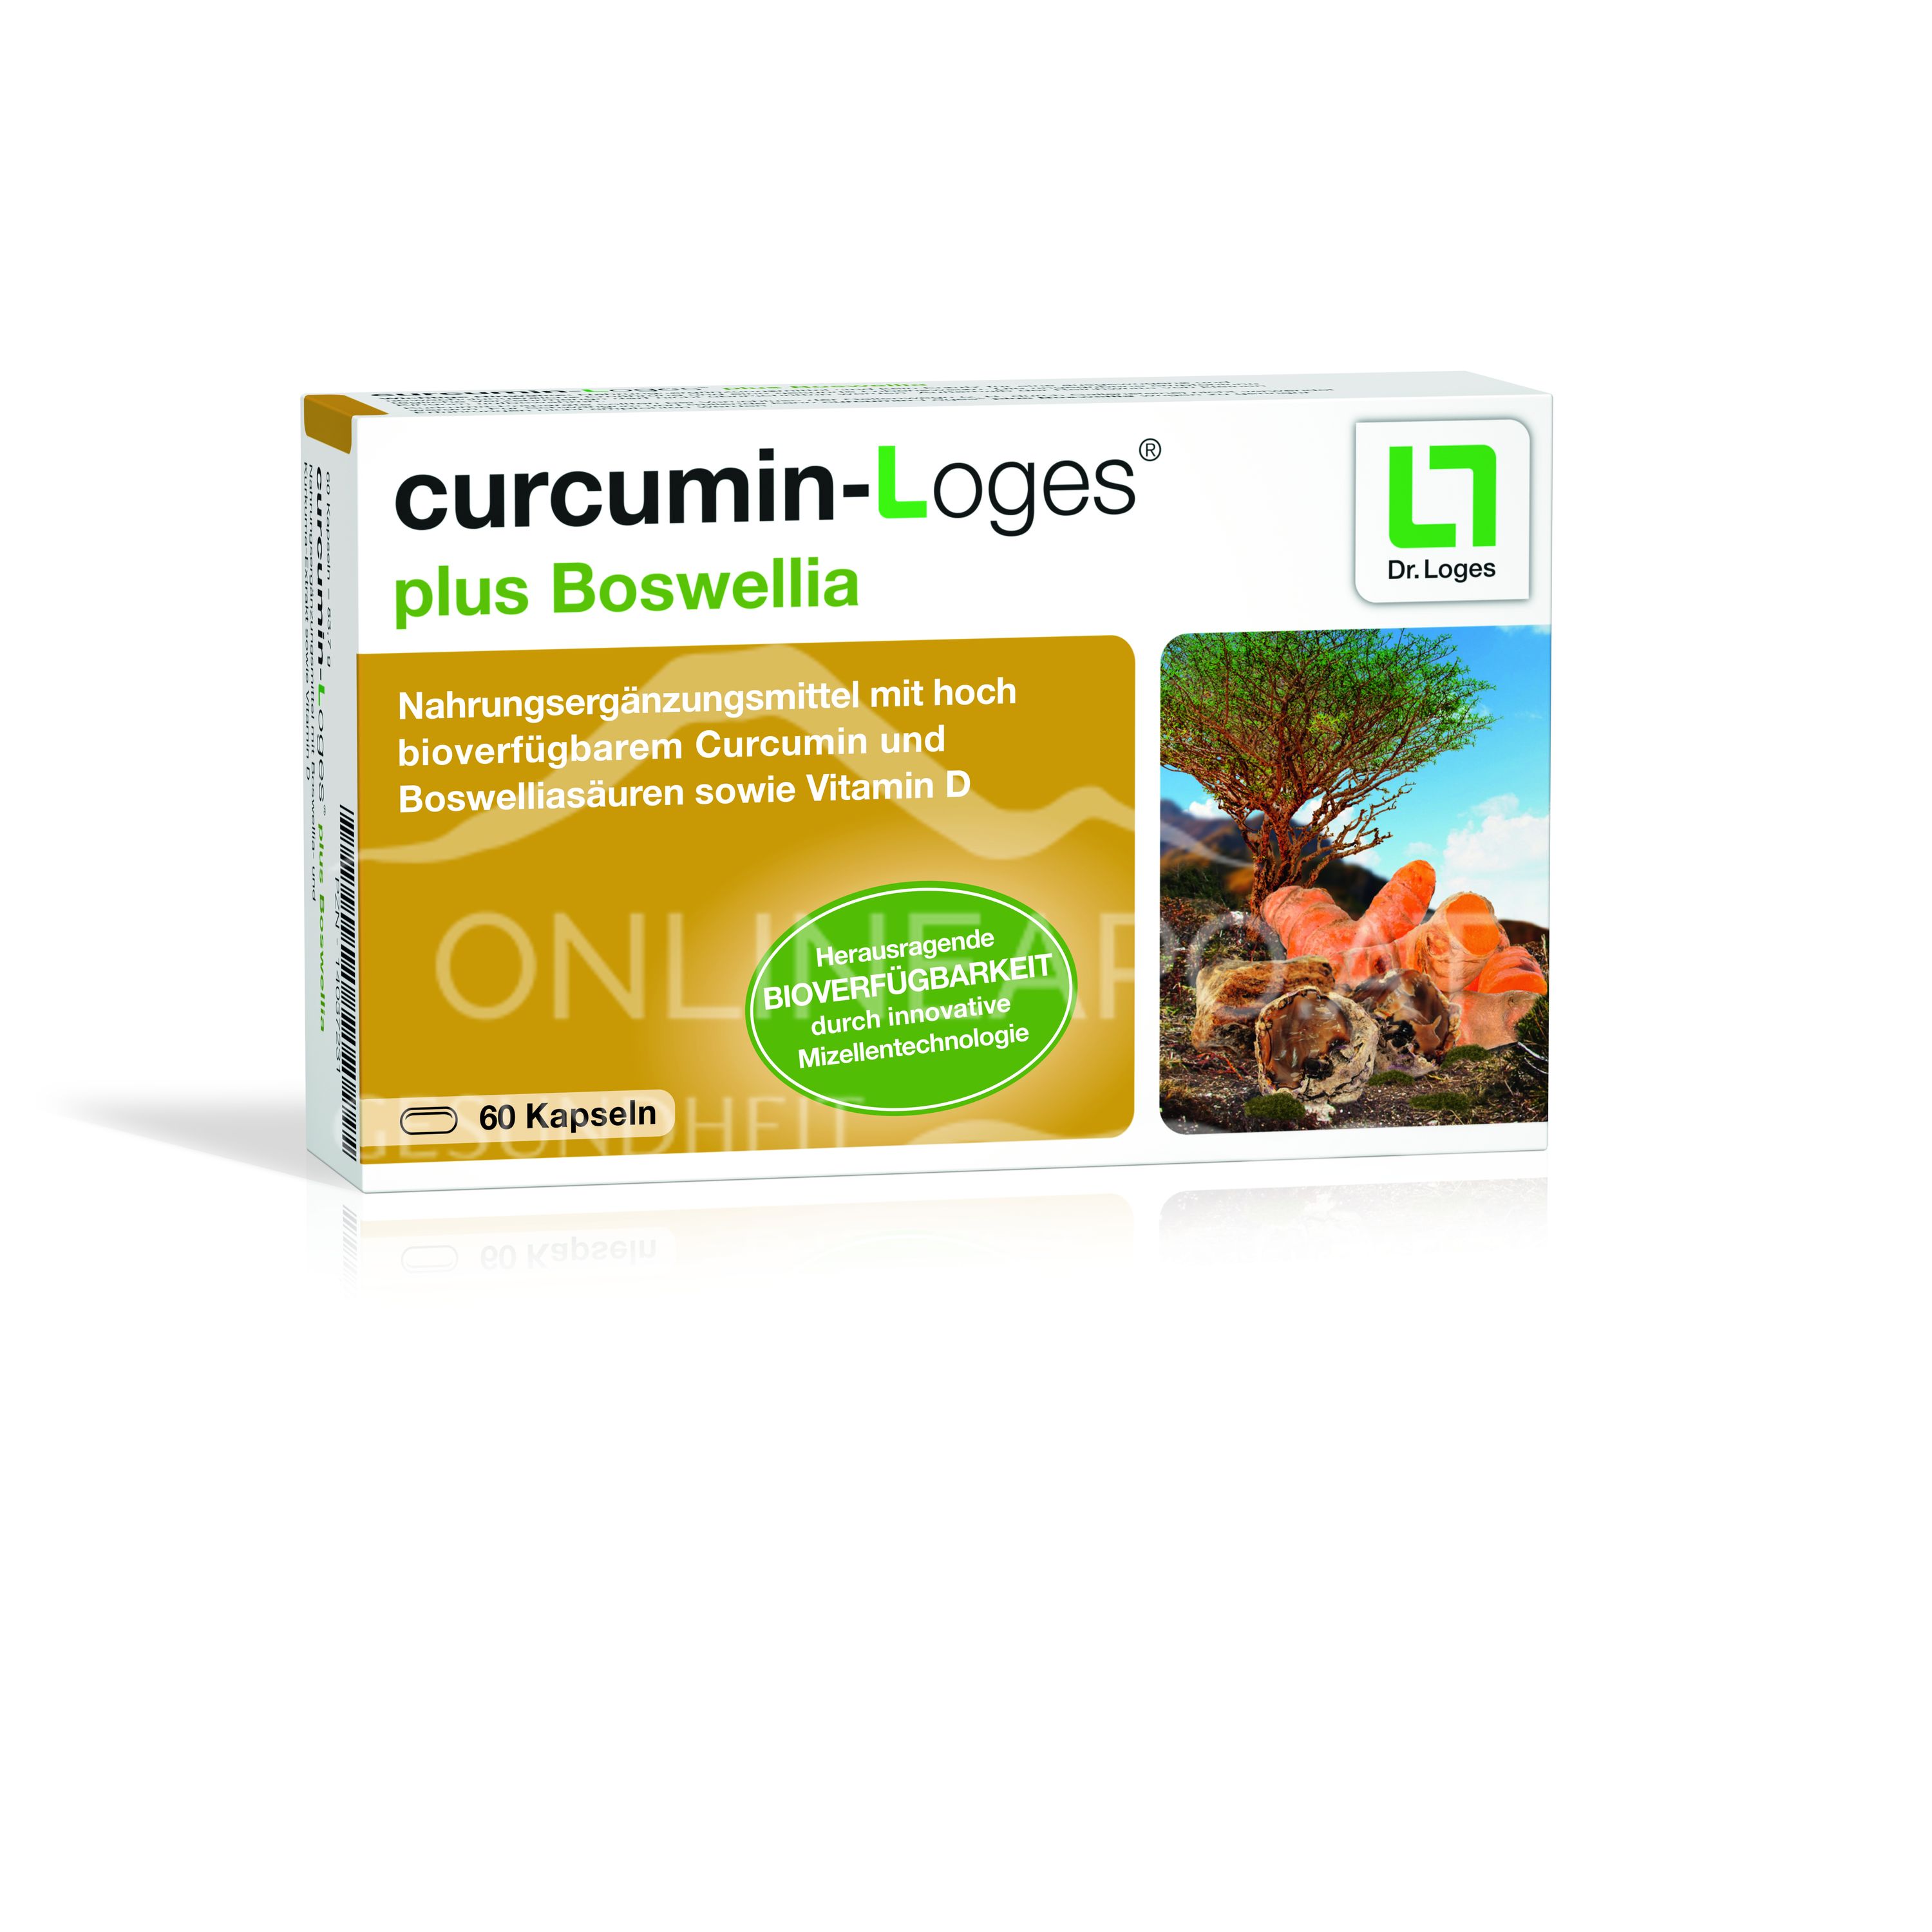 curcumin-Loges® plus Boswellia Kapseln